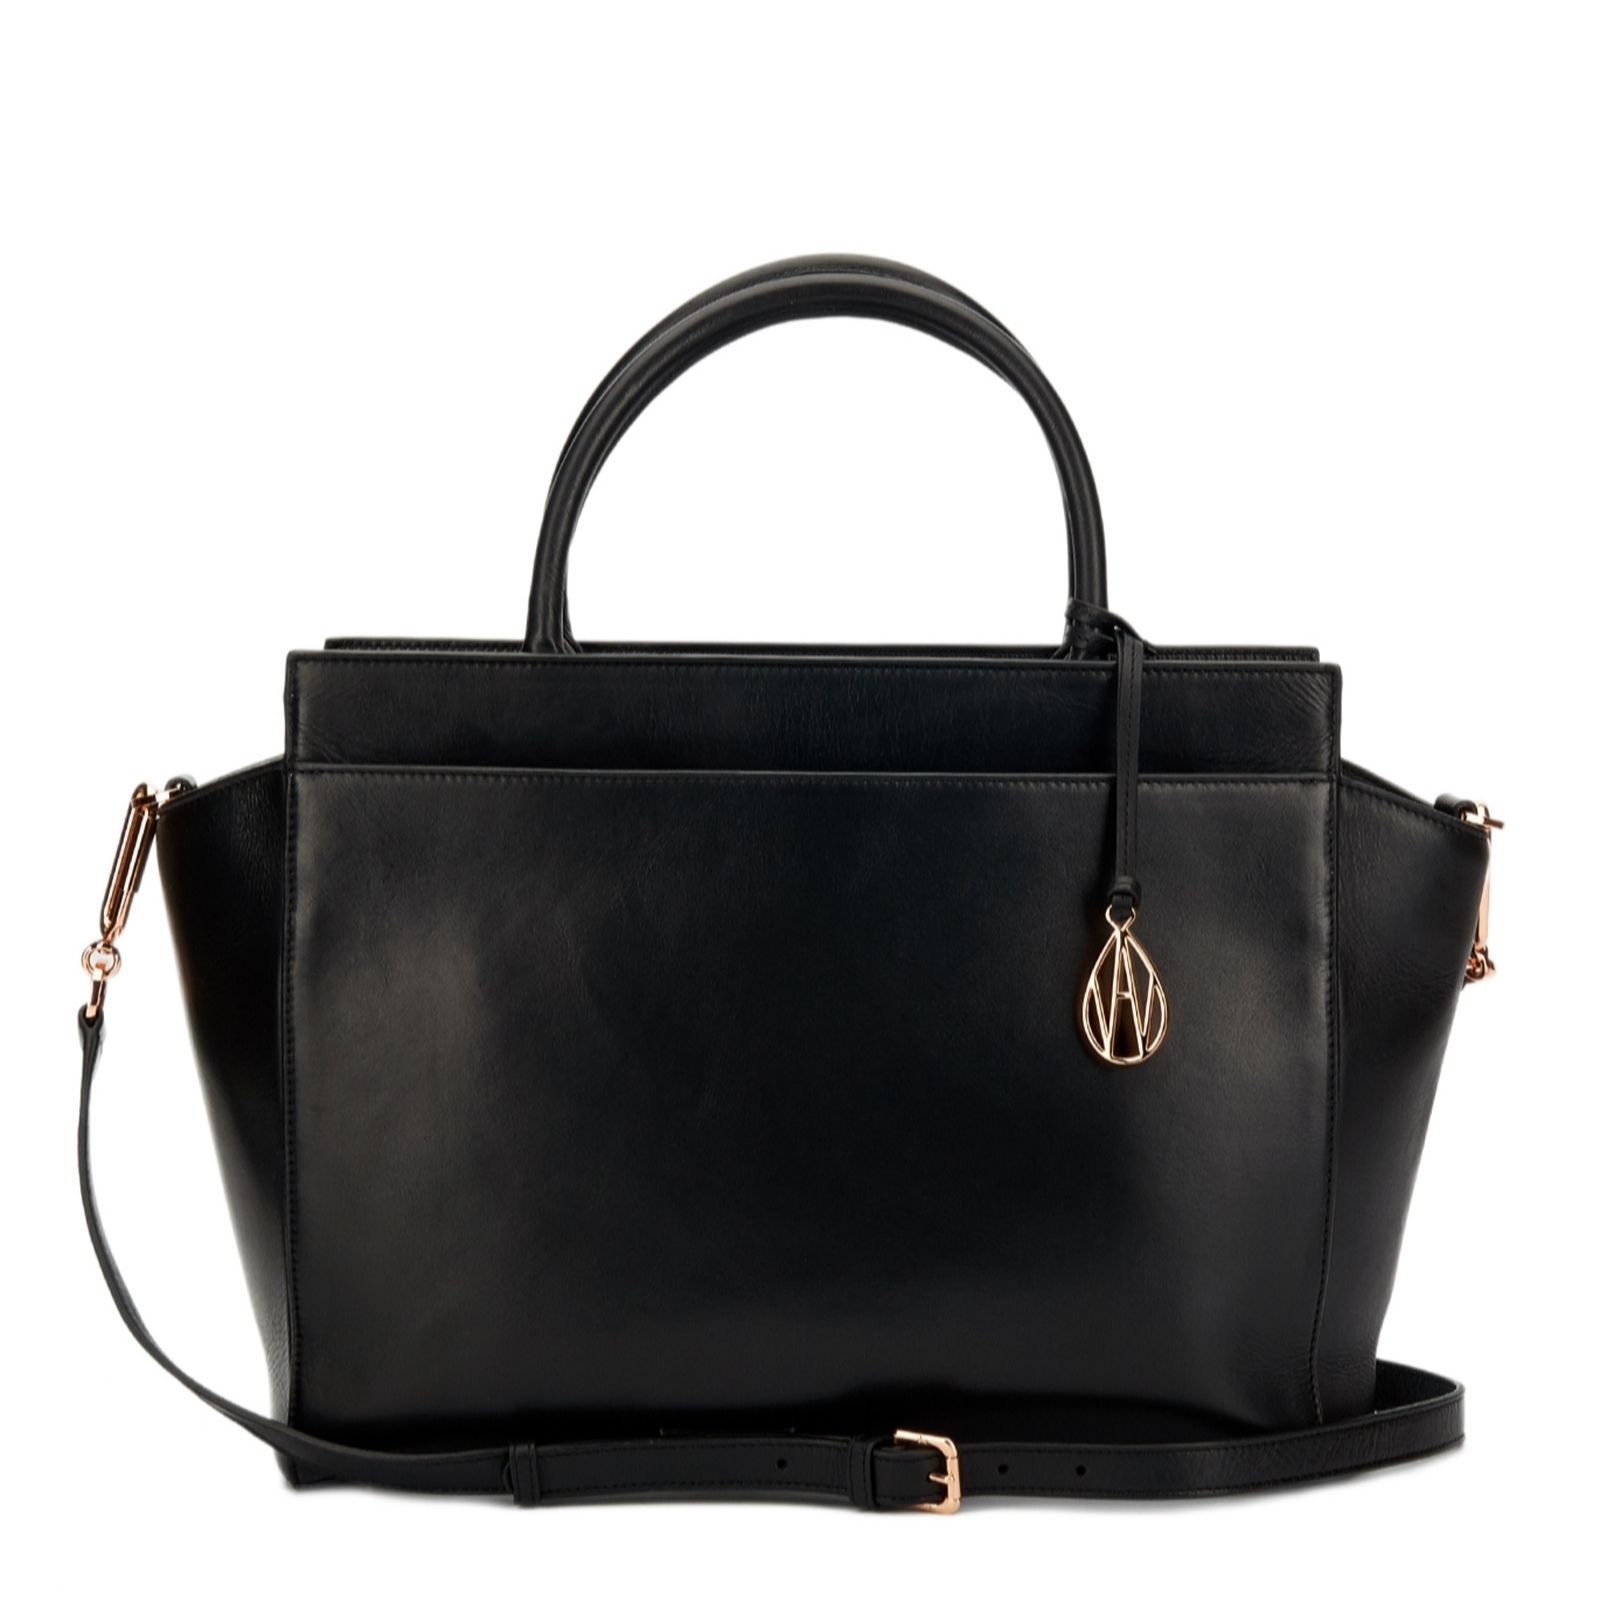 Amanda Wakeley The Sutherland Large Leather Tote Bag with Crossbody ...